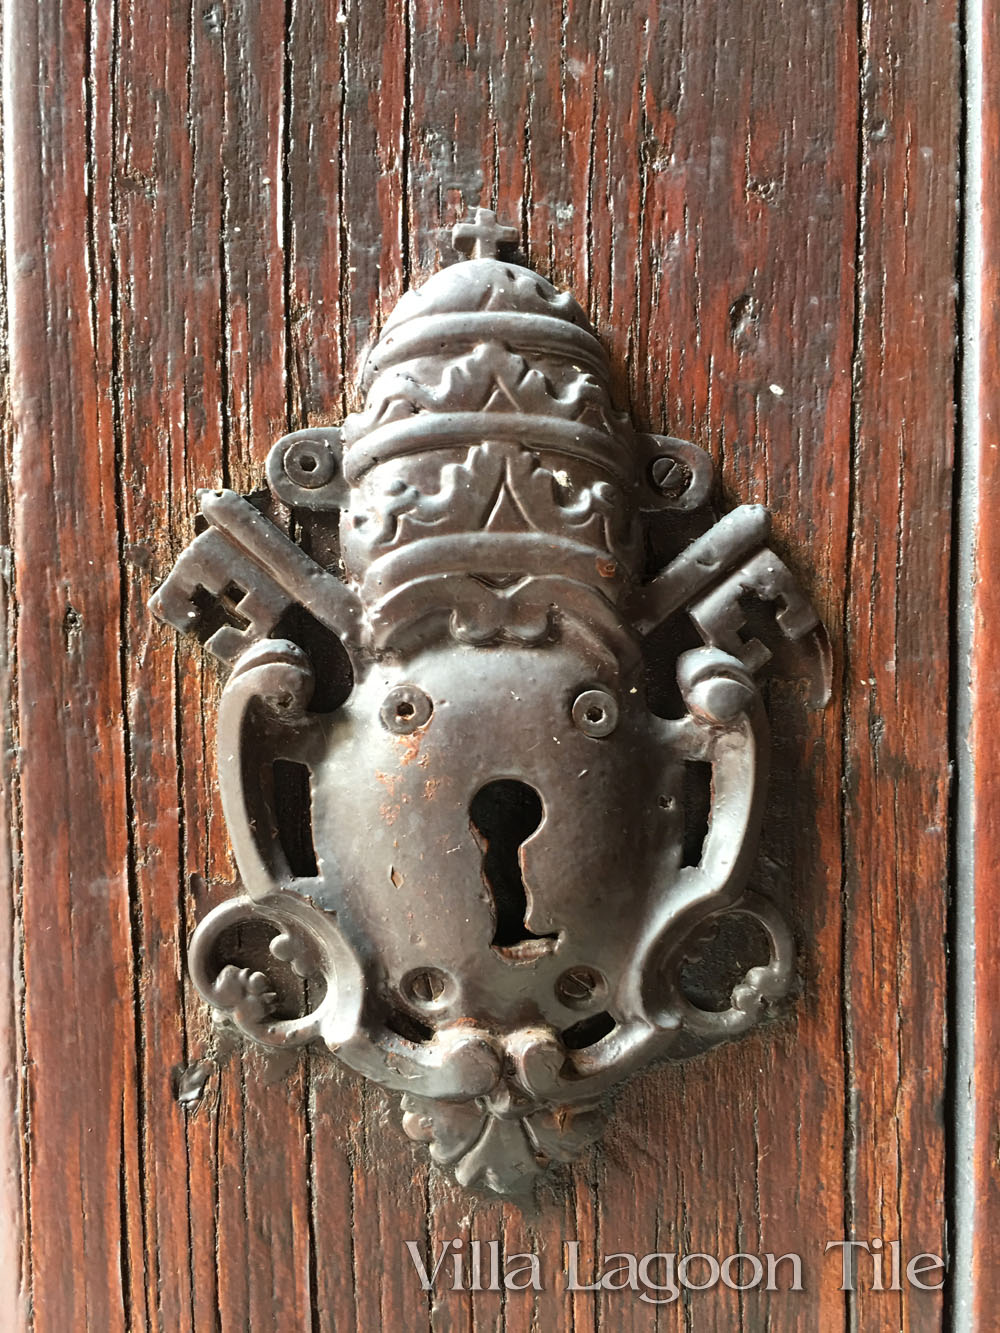 Cuban door hardware--wonderful details.